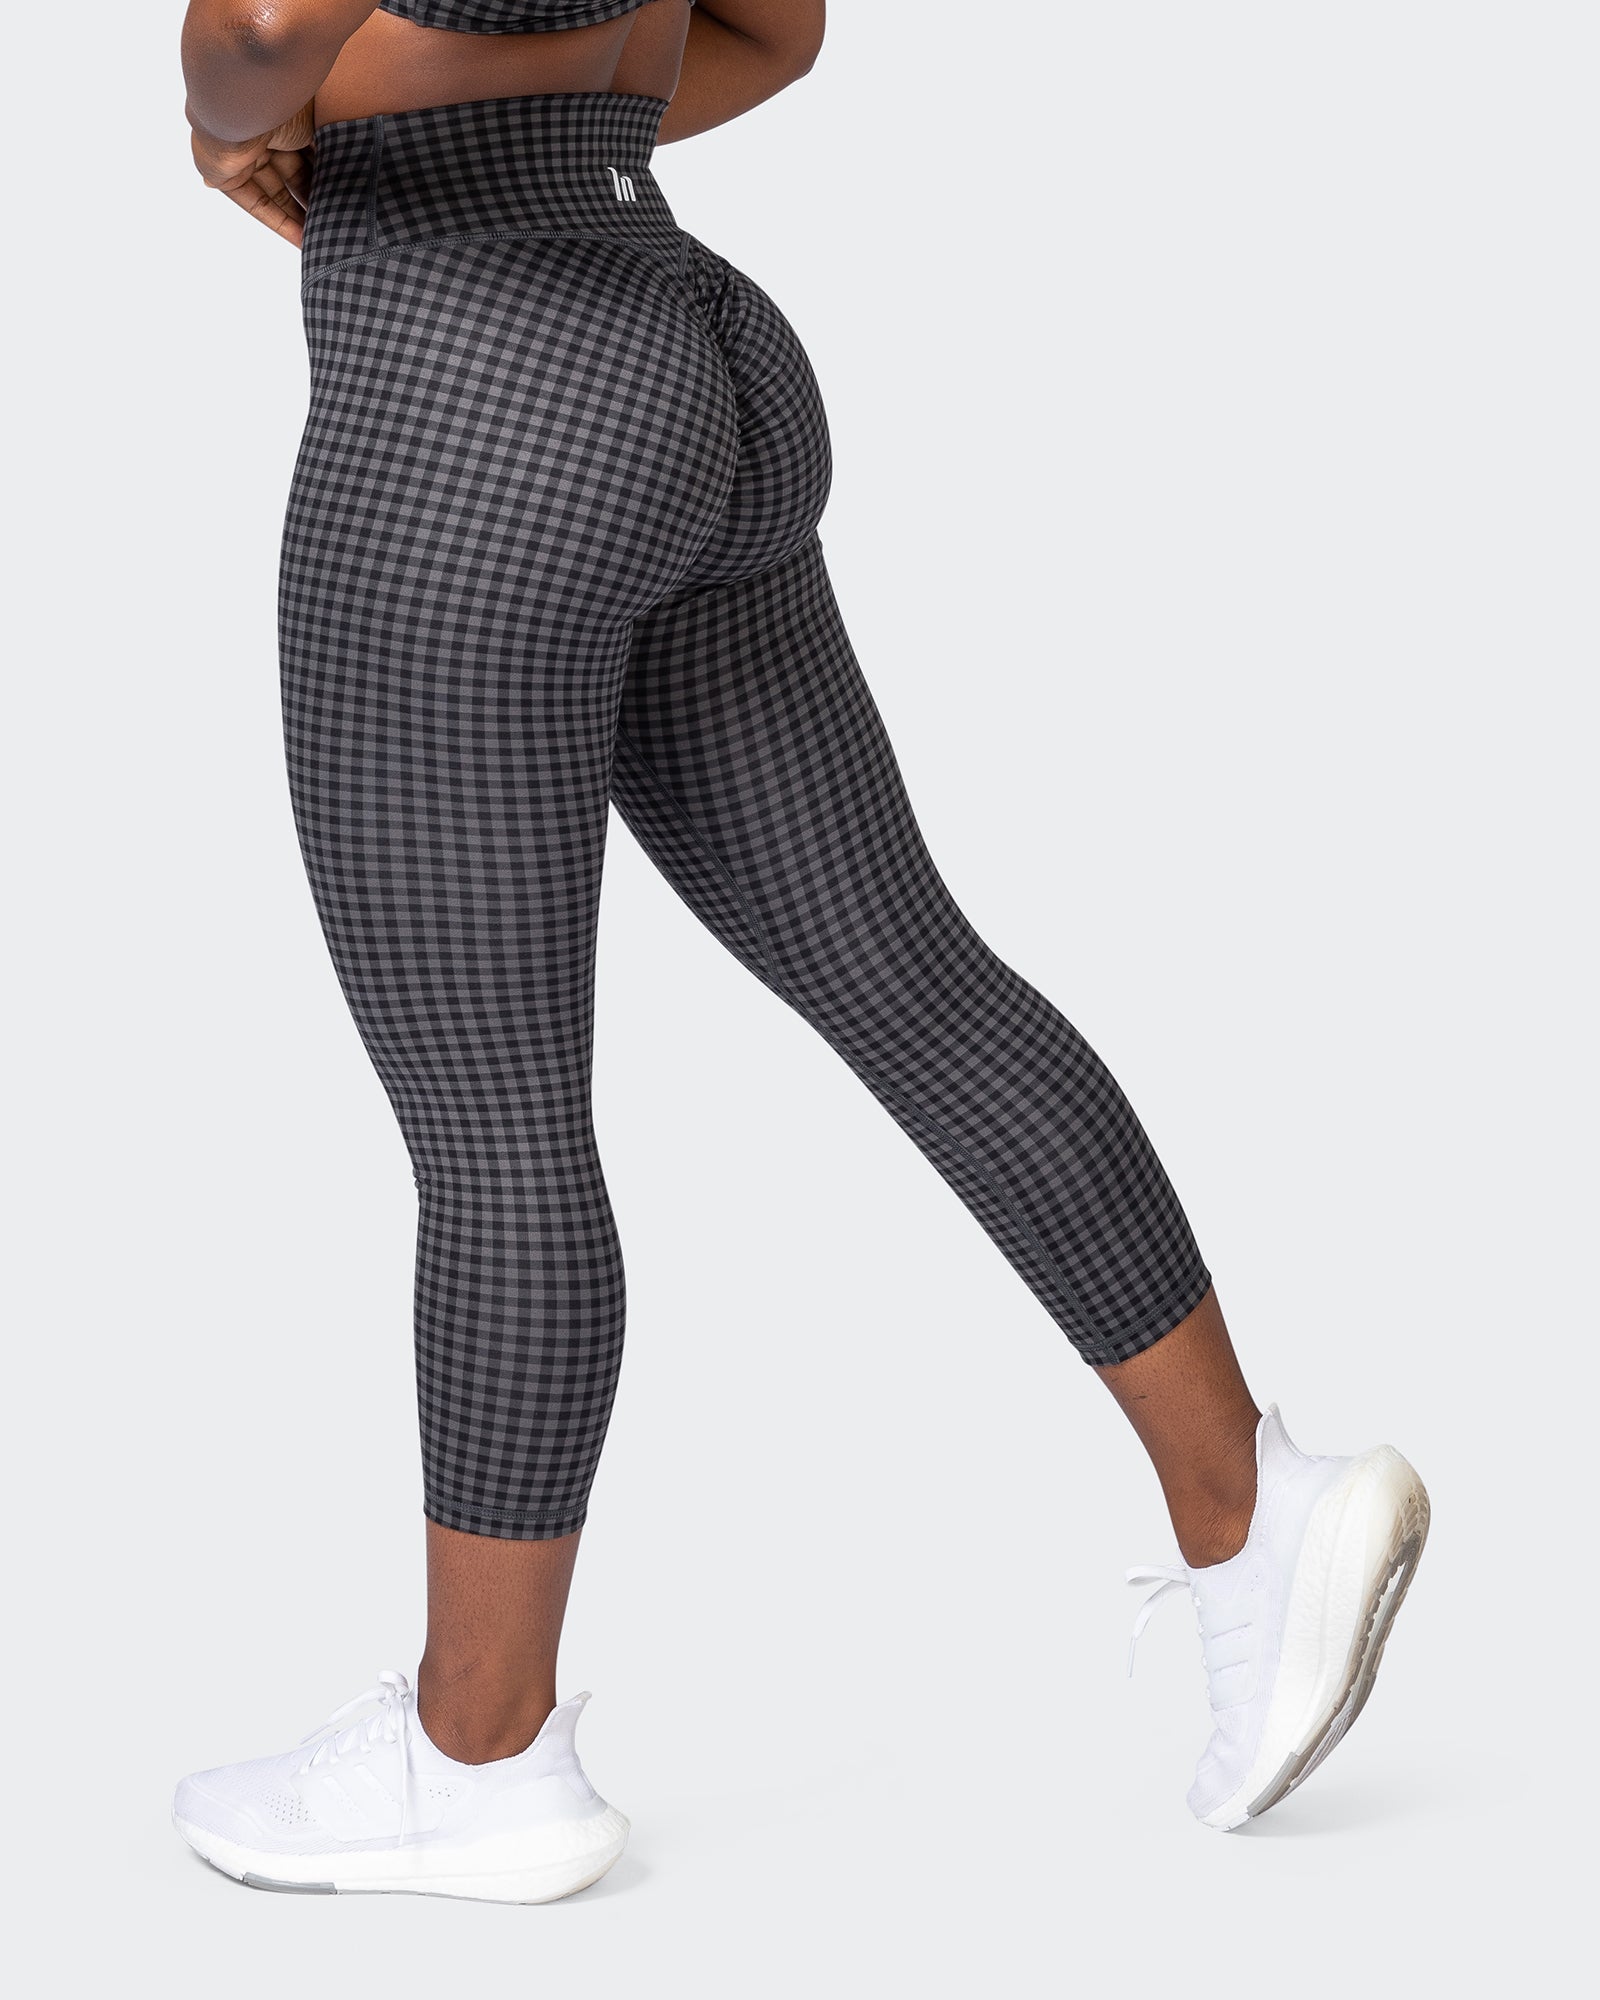 Buy Unisex Multicolor Checker Board Square Check Print Fleece Sweatpants  Jogging Bottom Jogger Loungewear Pants Online in India - Etsy